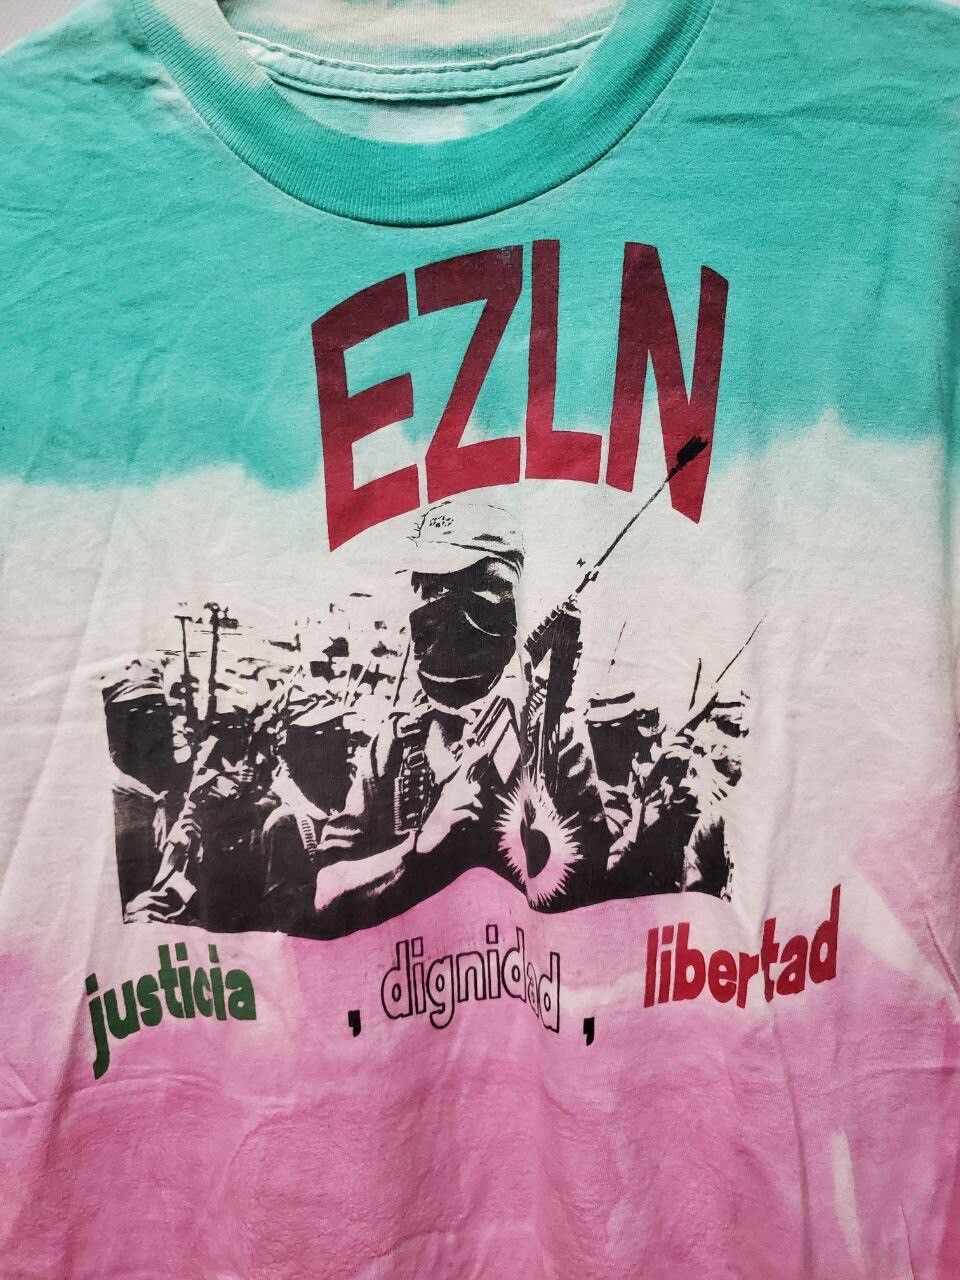 Very Rare EZLN Emiliano Zapata Revolution Vintage Rare 90s War T-shirt Size US L / EU 52-54 / 3 - 3 Thumbnail